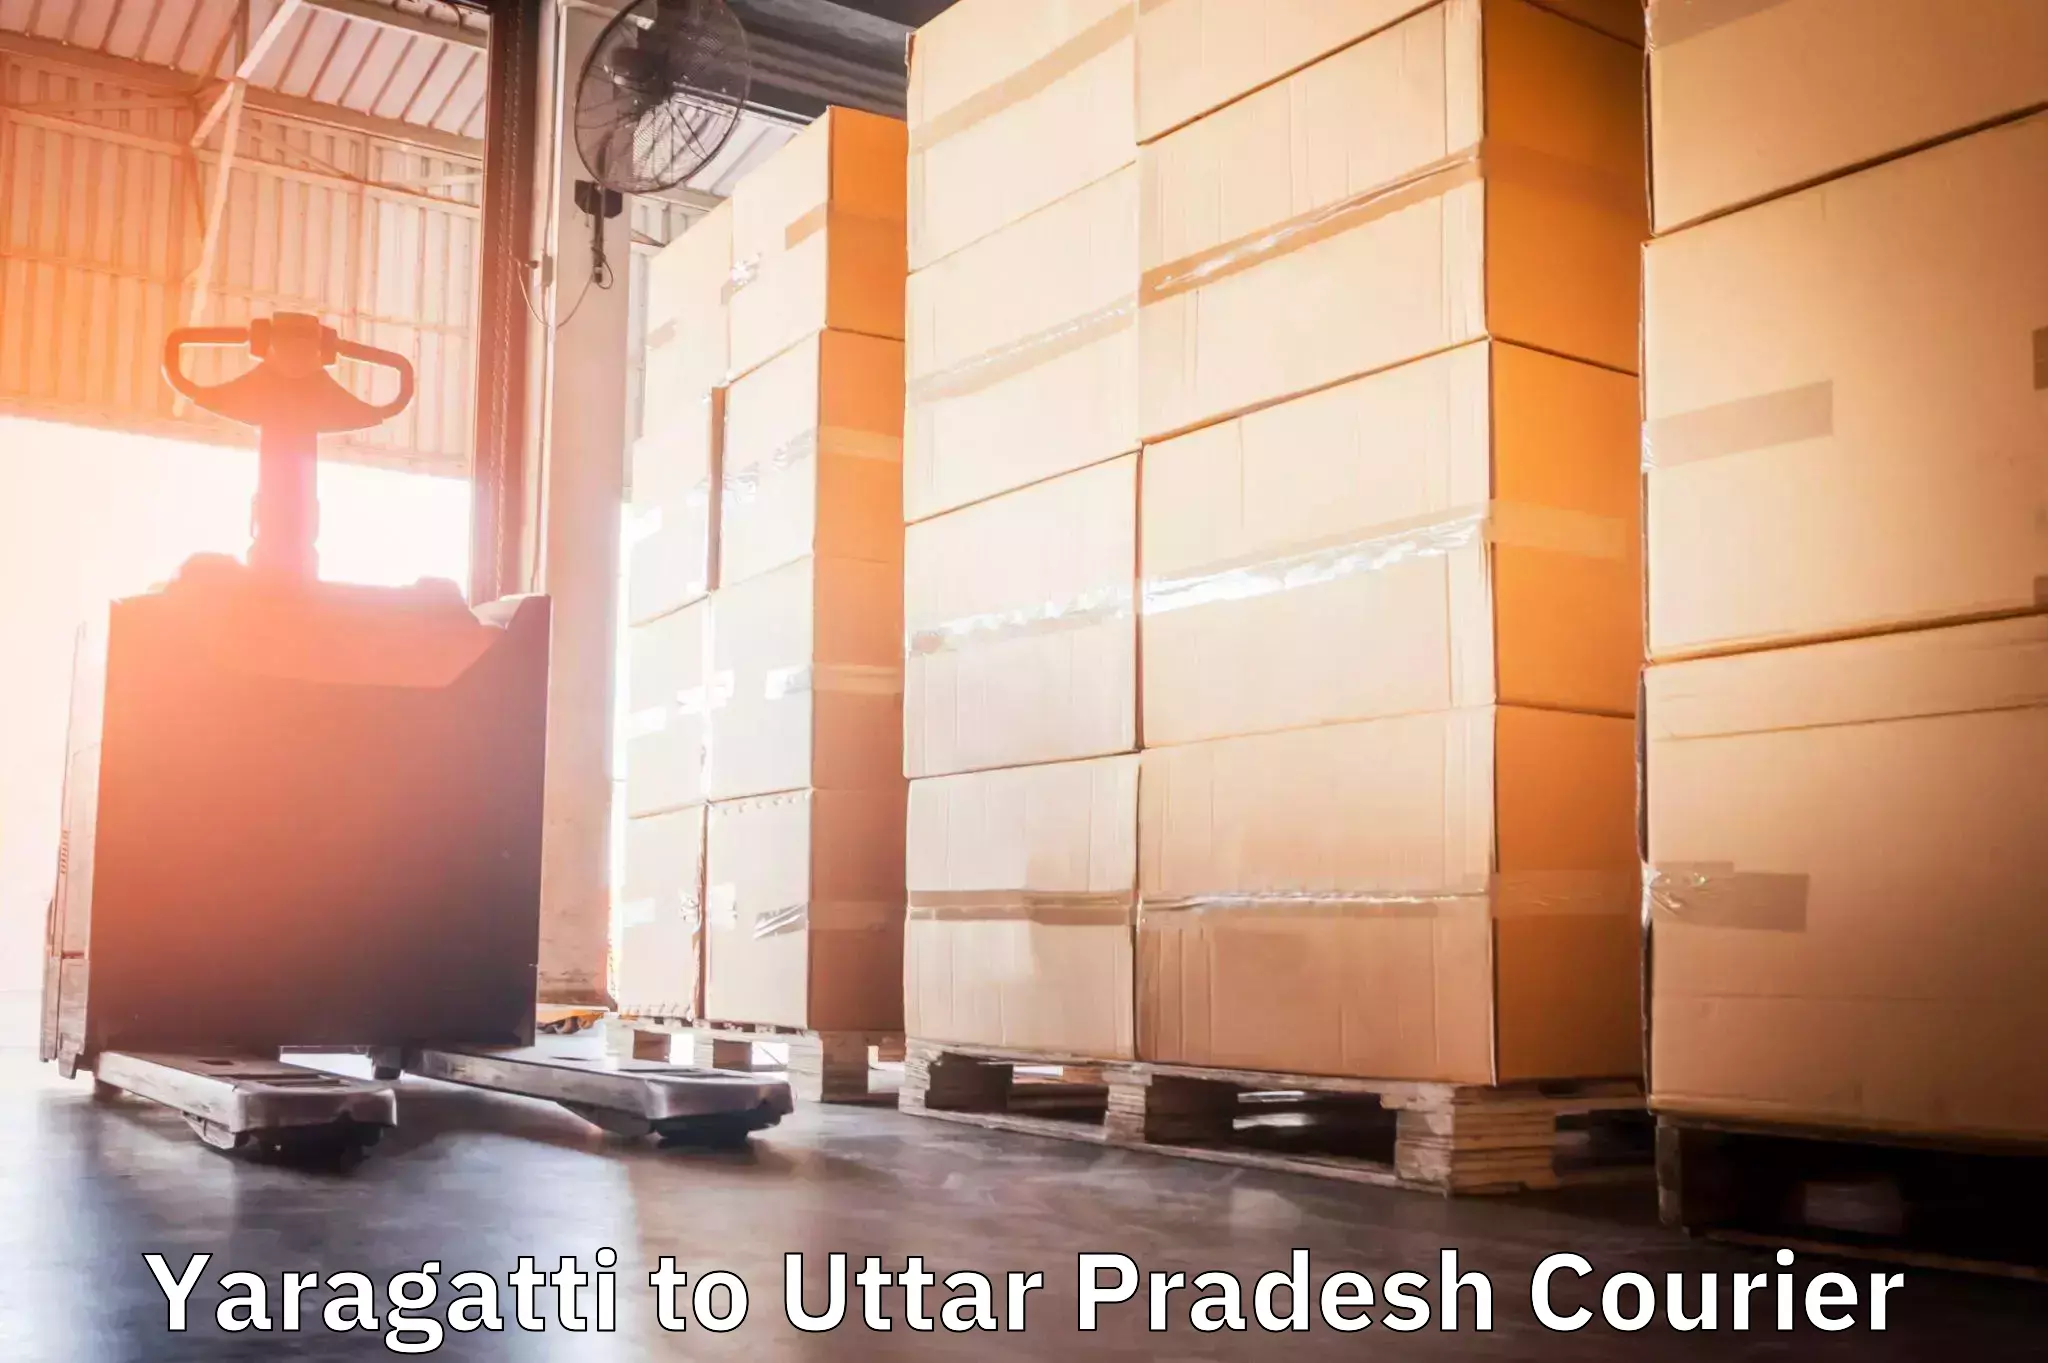 Package tracking Yaragatti to Dudhinagar